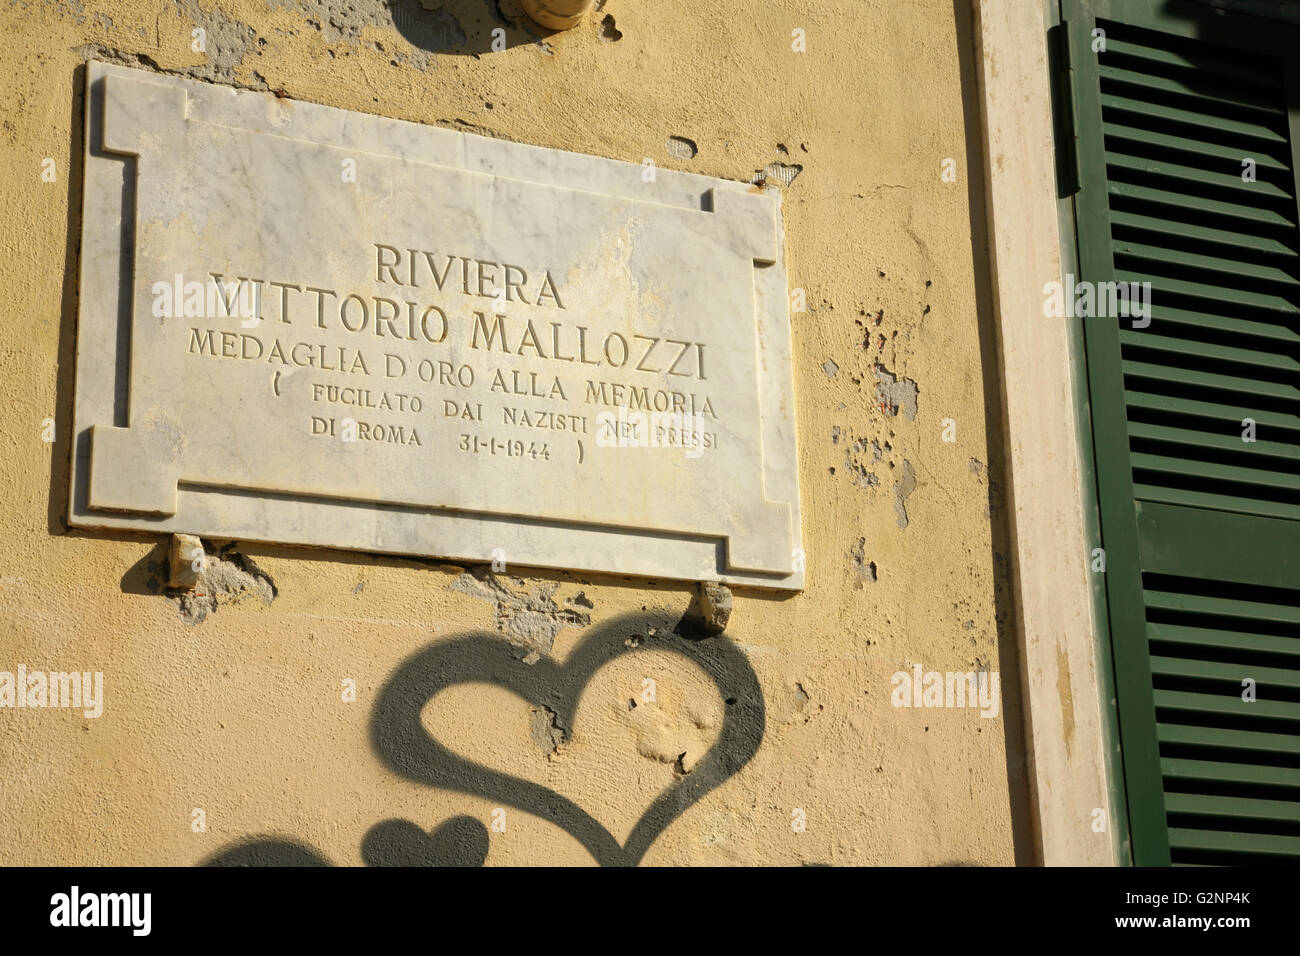 Memorial plaque to Italian anti-fascist resistance fighter Vittorio Mallozzi, shot by Nazis in 1944. Stock Photo